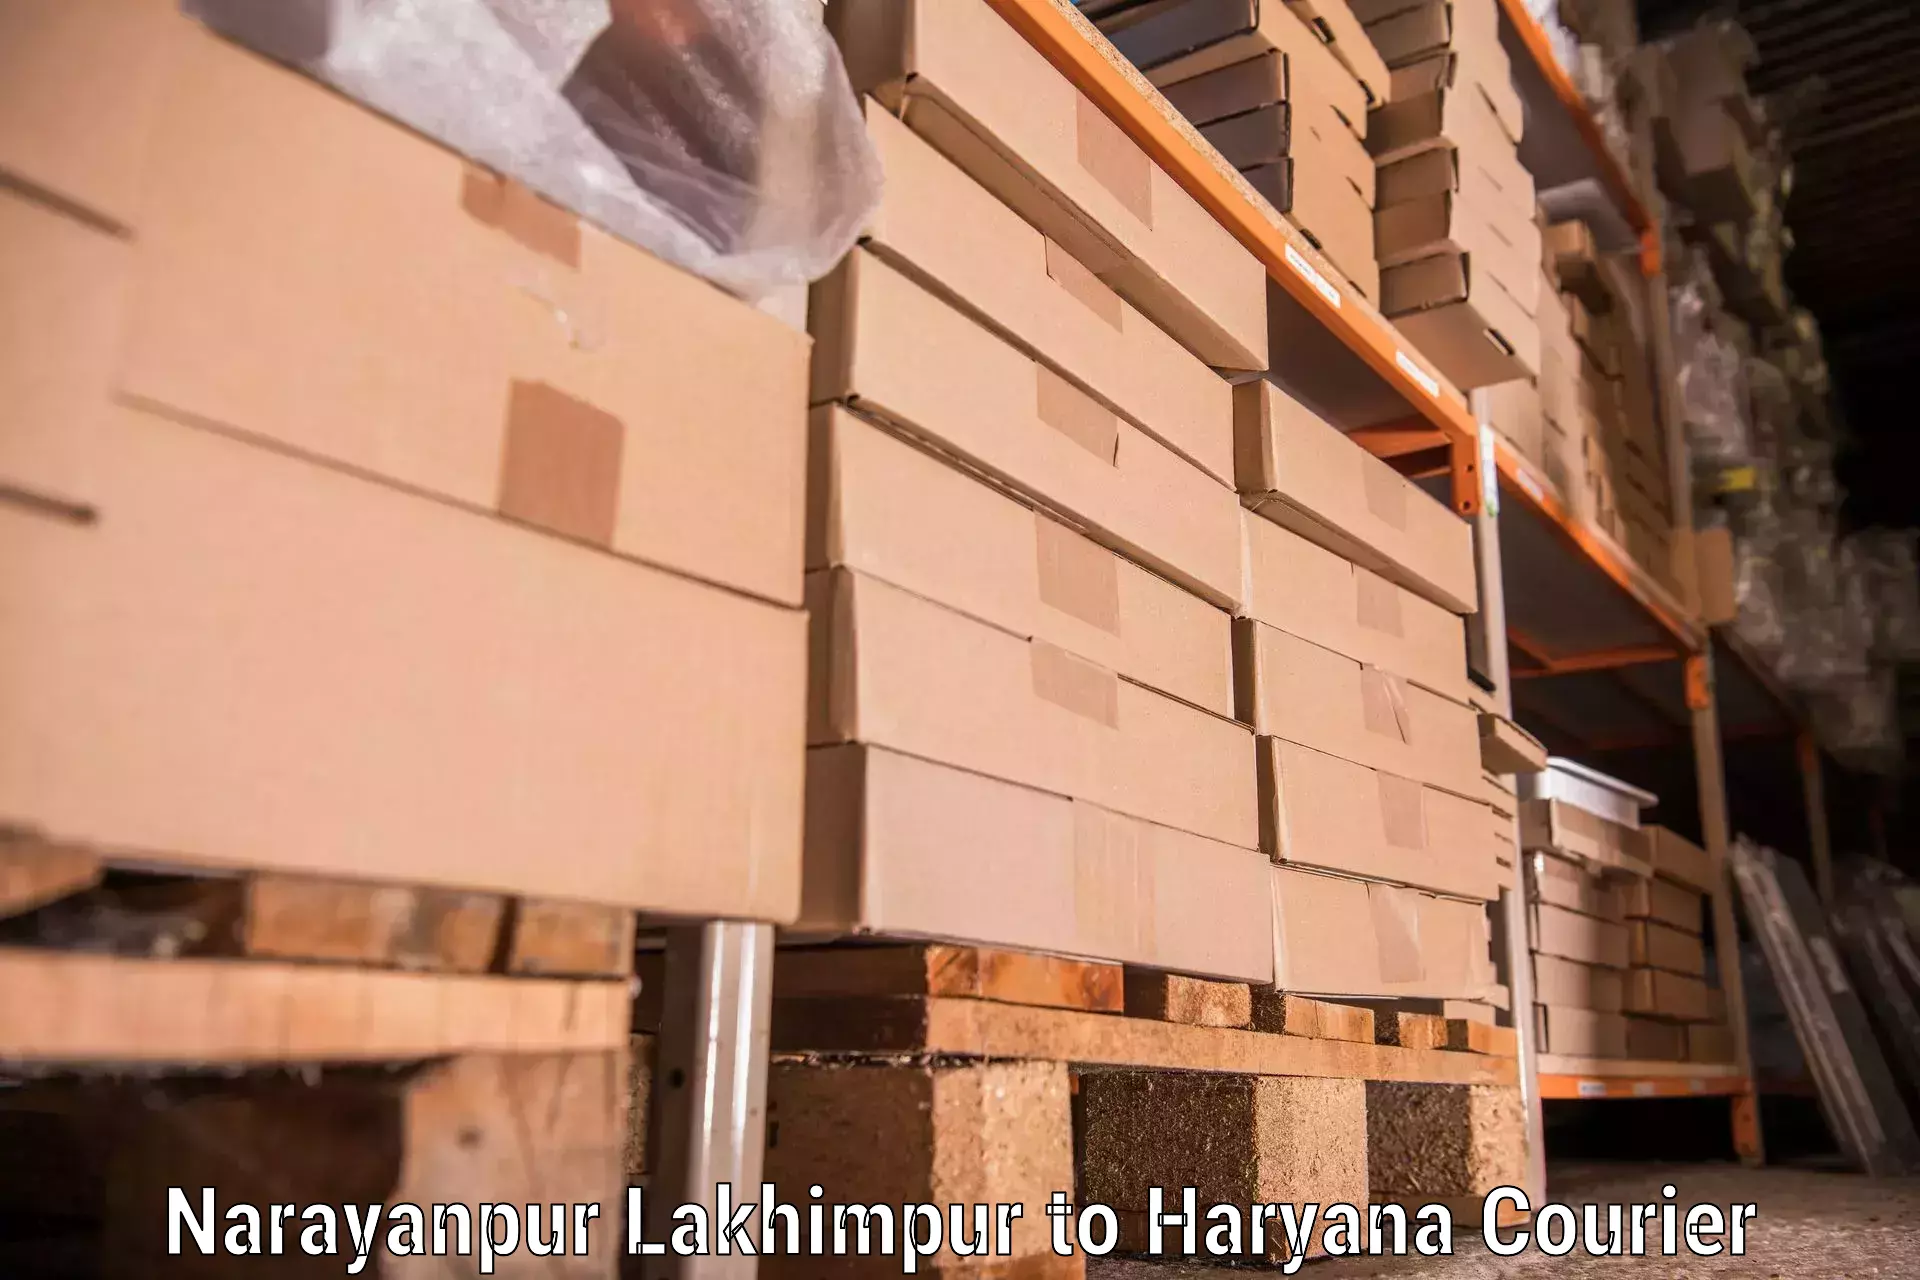 Furniture relocation experts Narayanpur Lakhimpur to Gohana